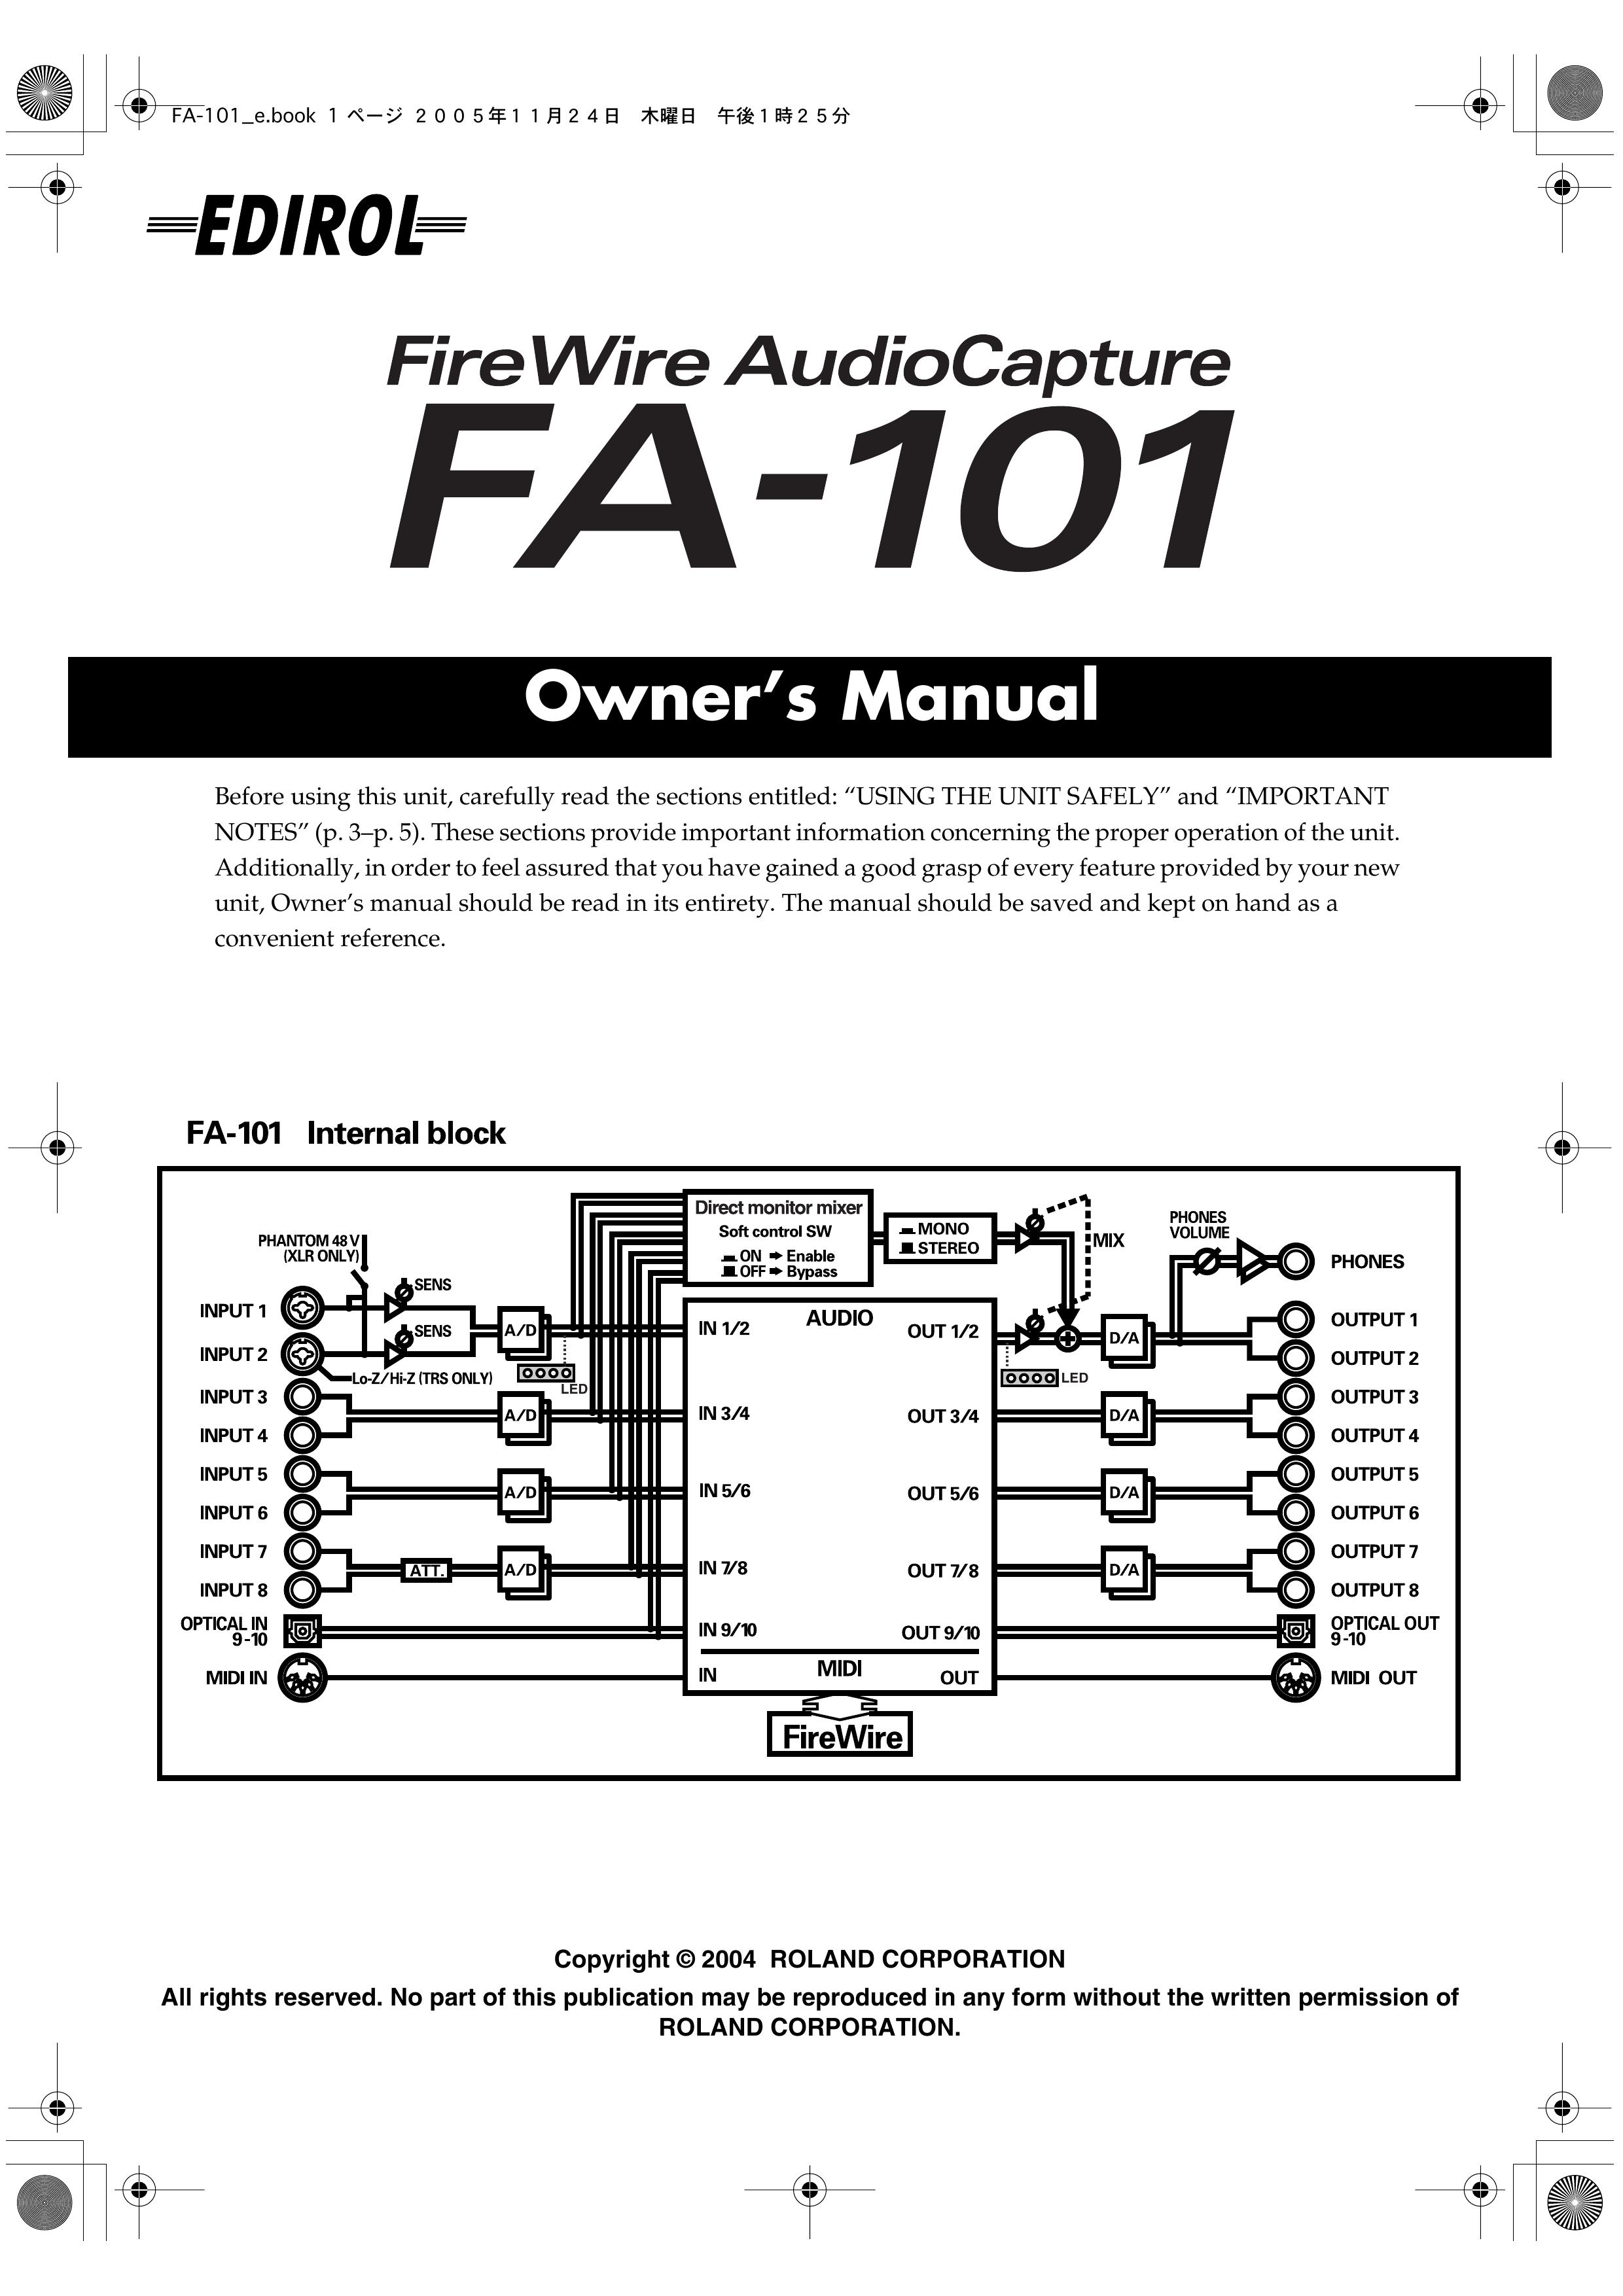 Edirol FA-101 Musical Instrument User Manual (Page 1)